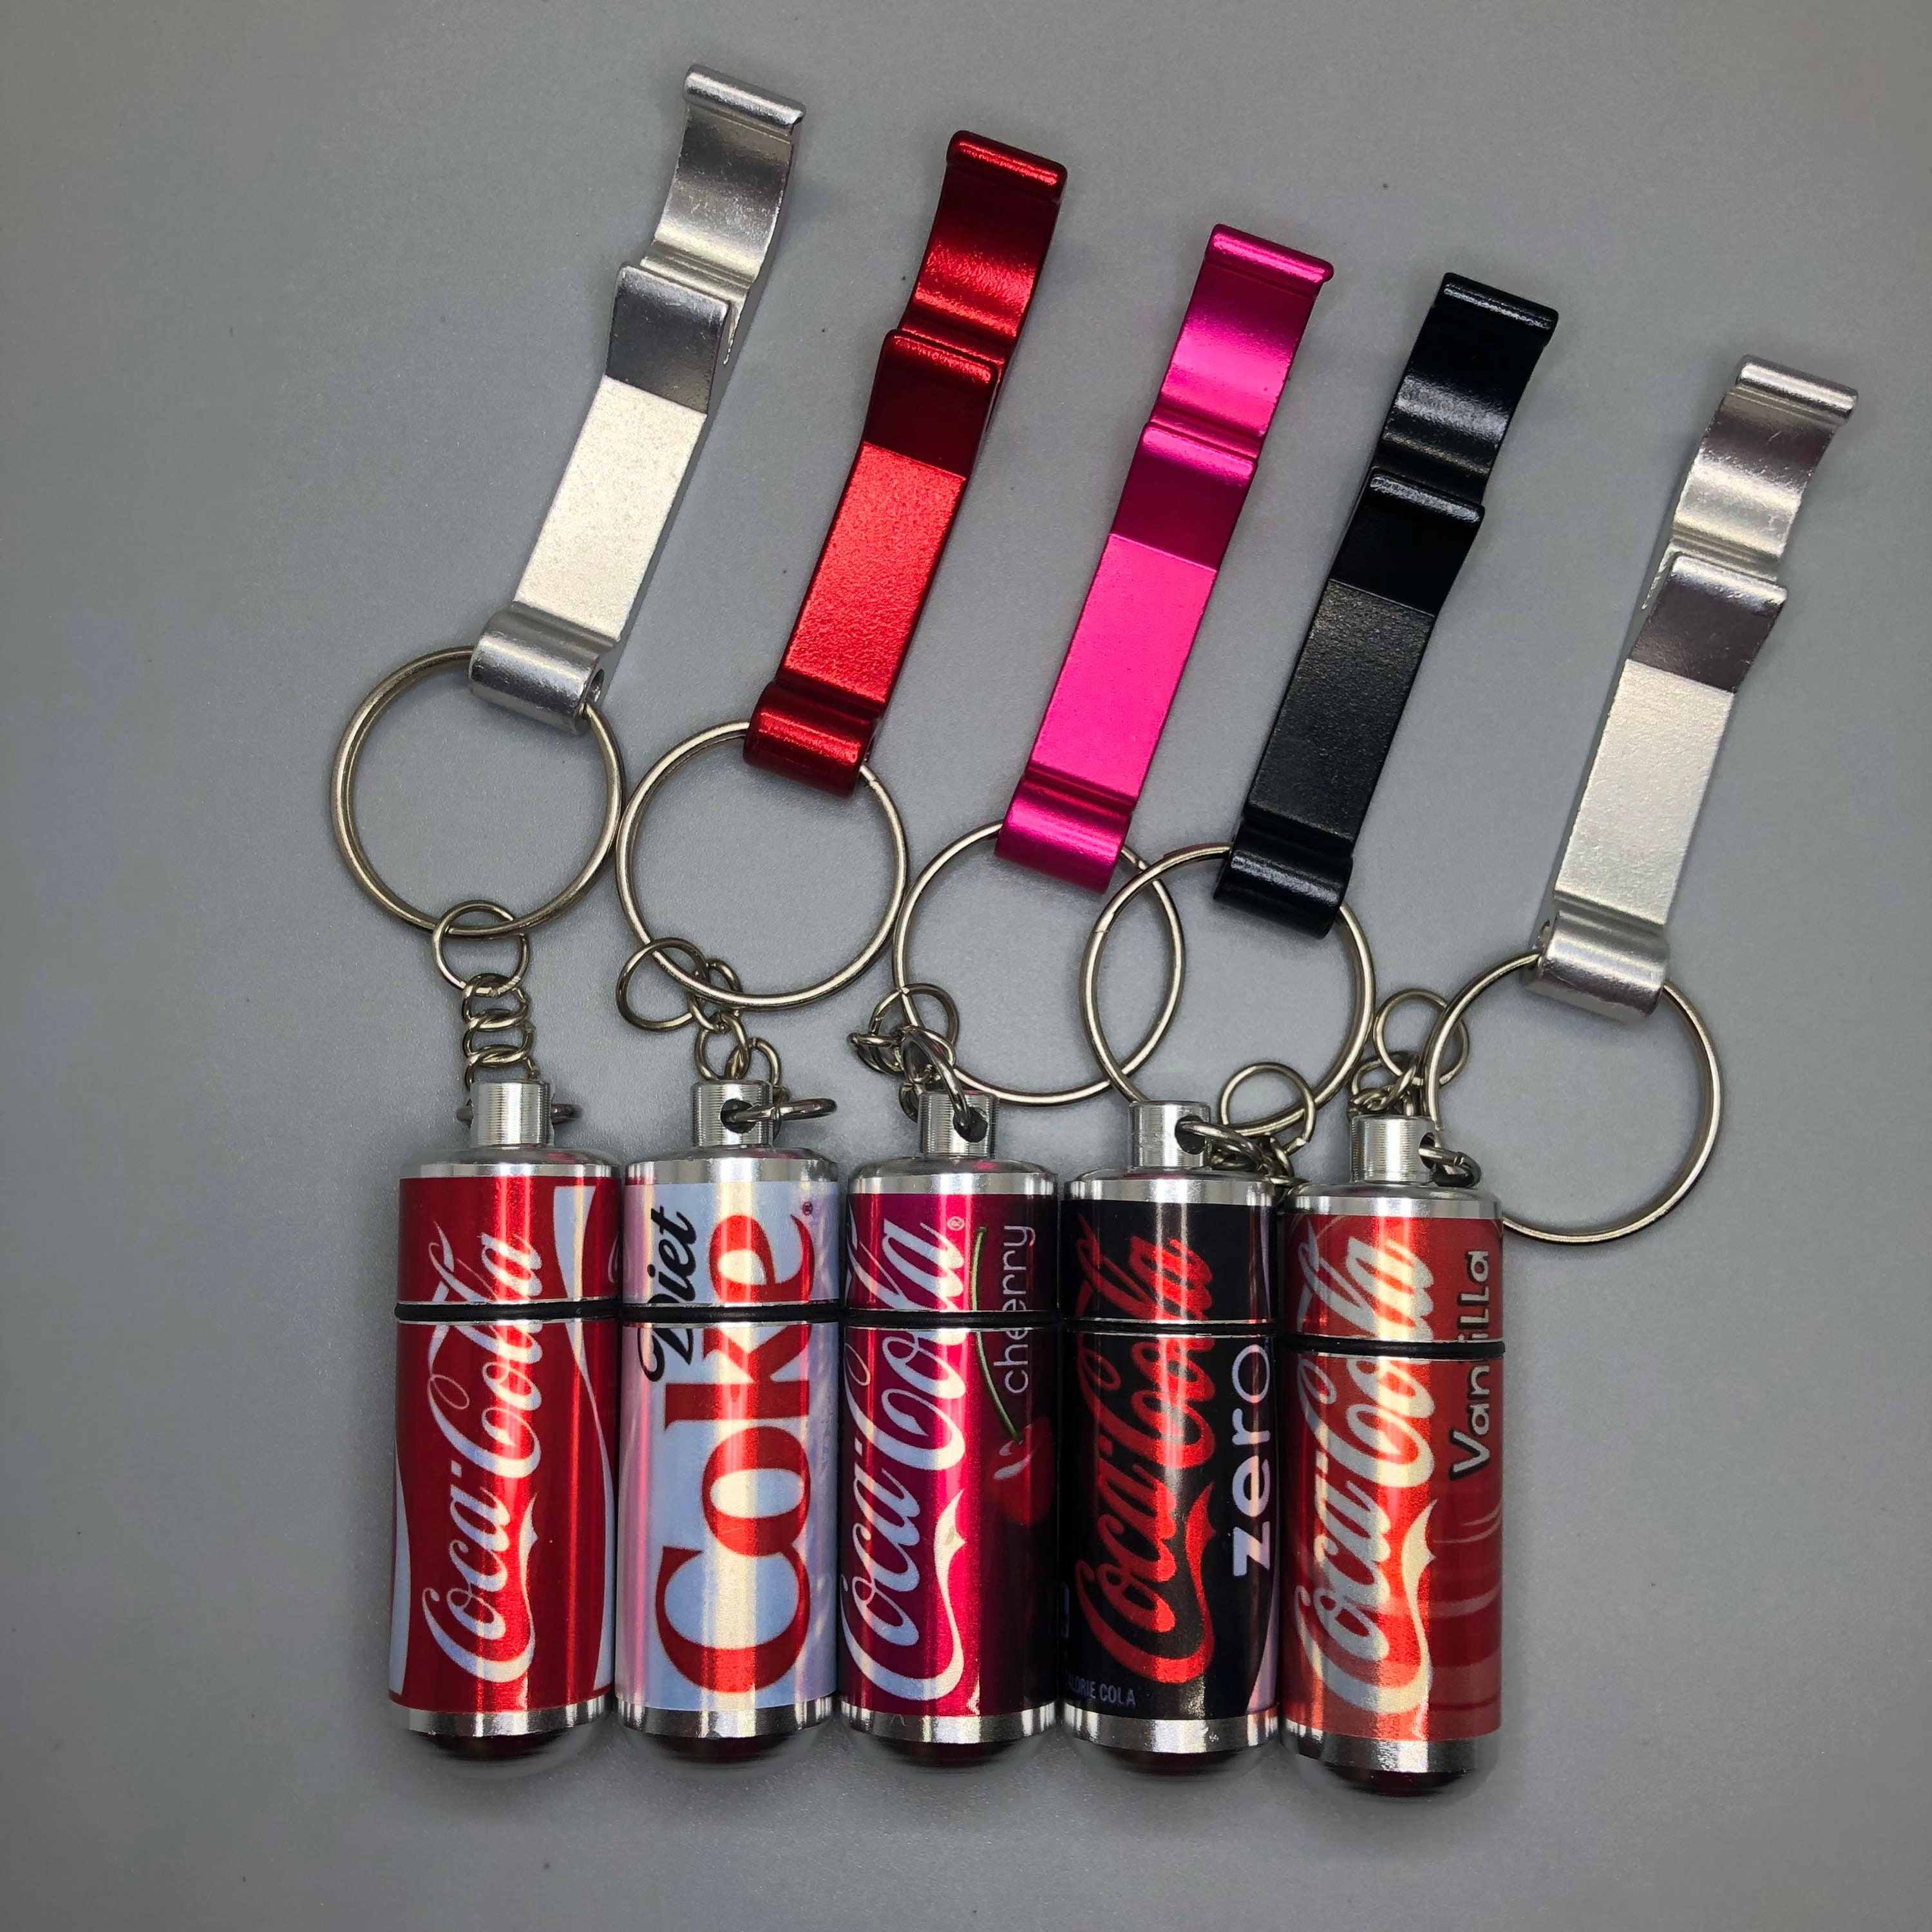 Kreative Mini-Getränkedosen Schlüssel bund Männer Simulation Dosen